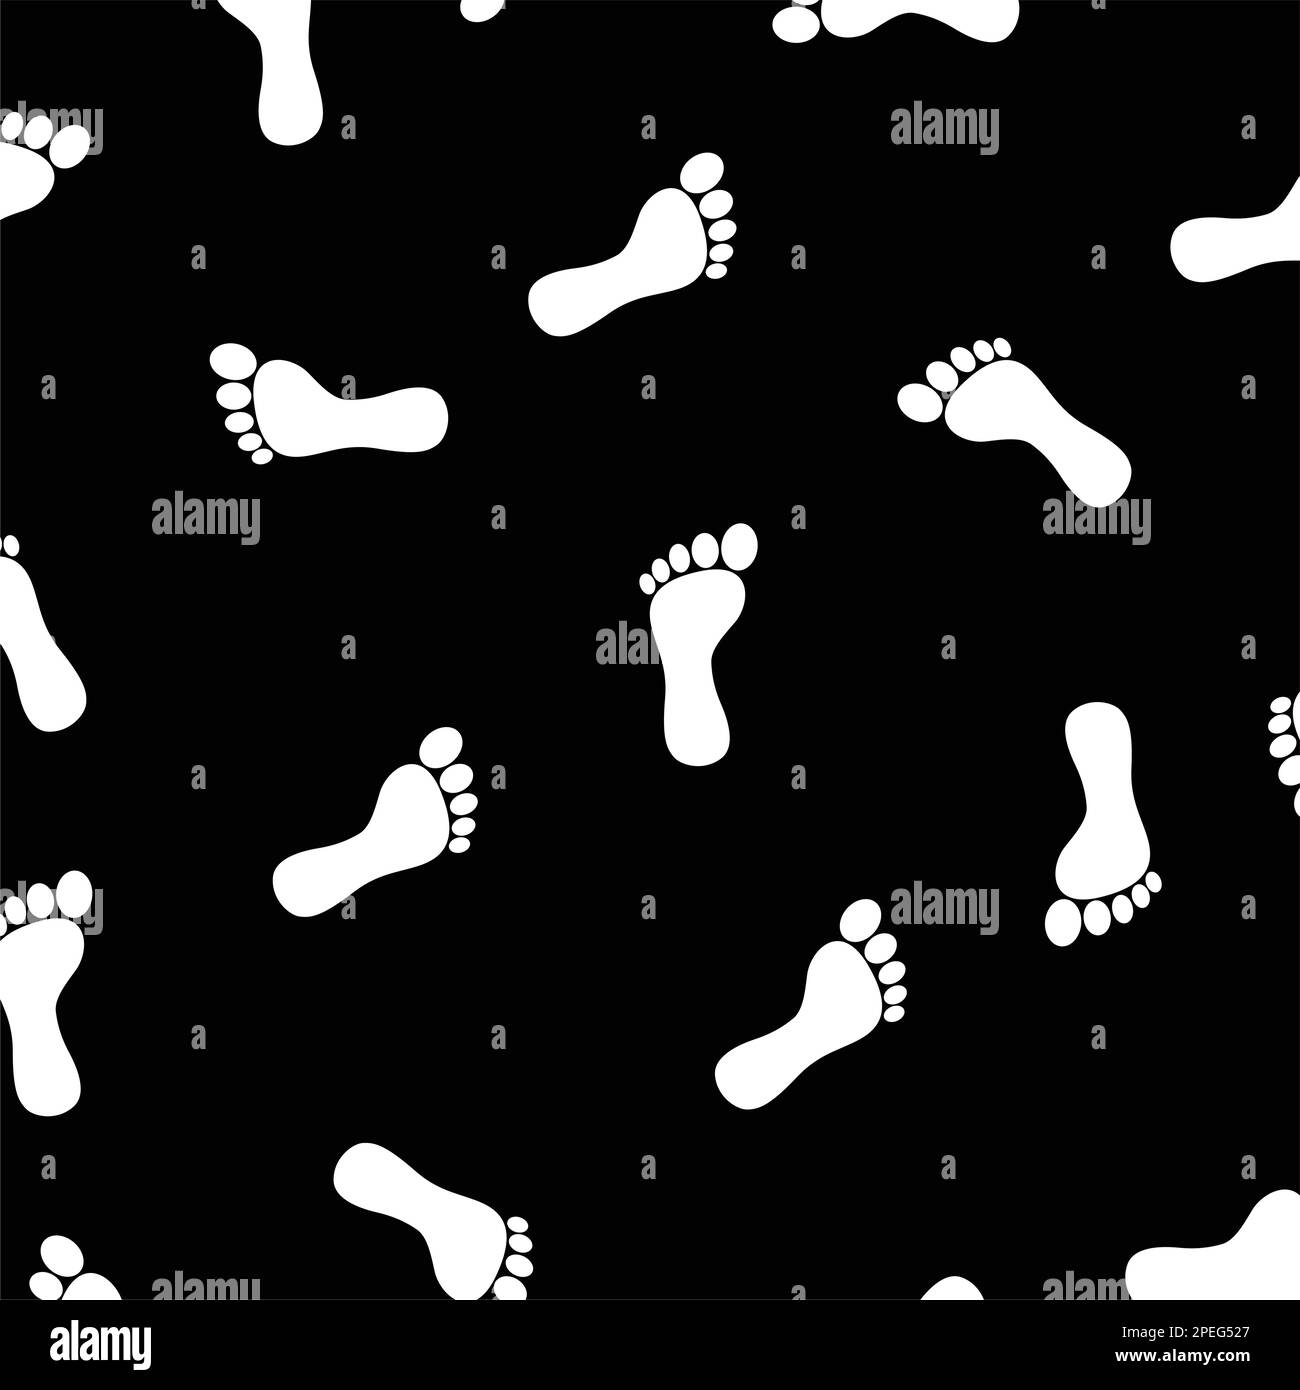 human footprint background vektor illustration Stock Vector